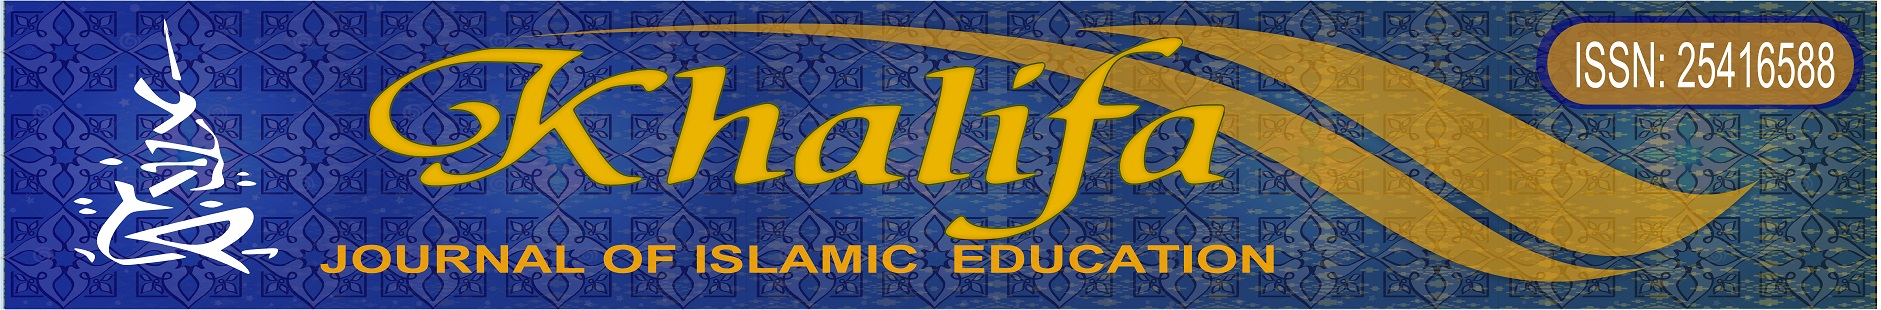 Journal of Islamic Education